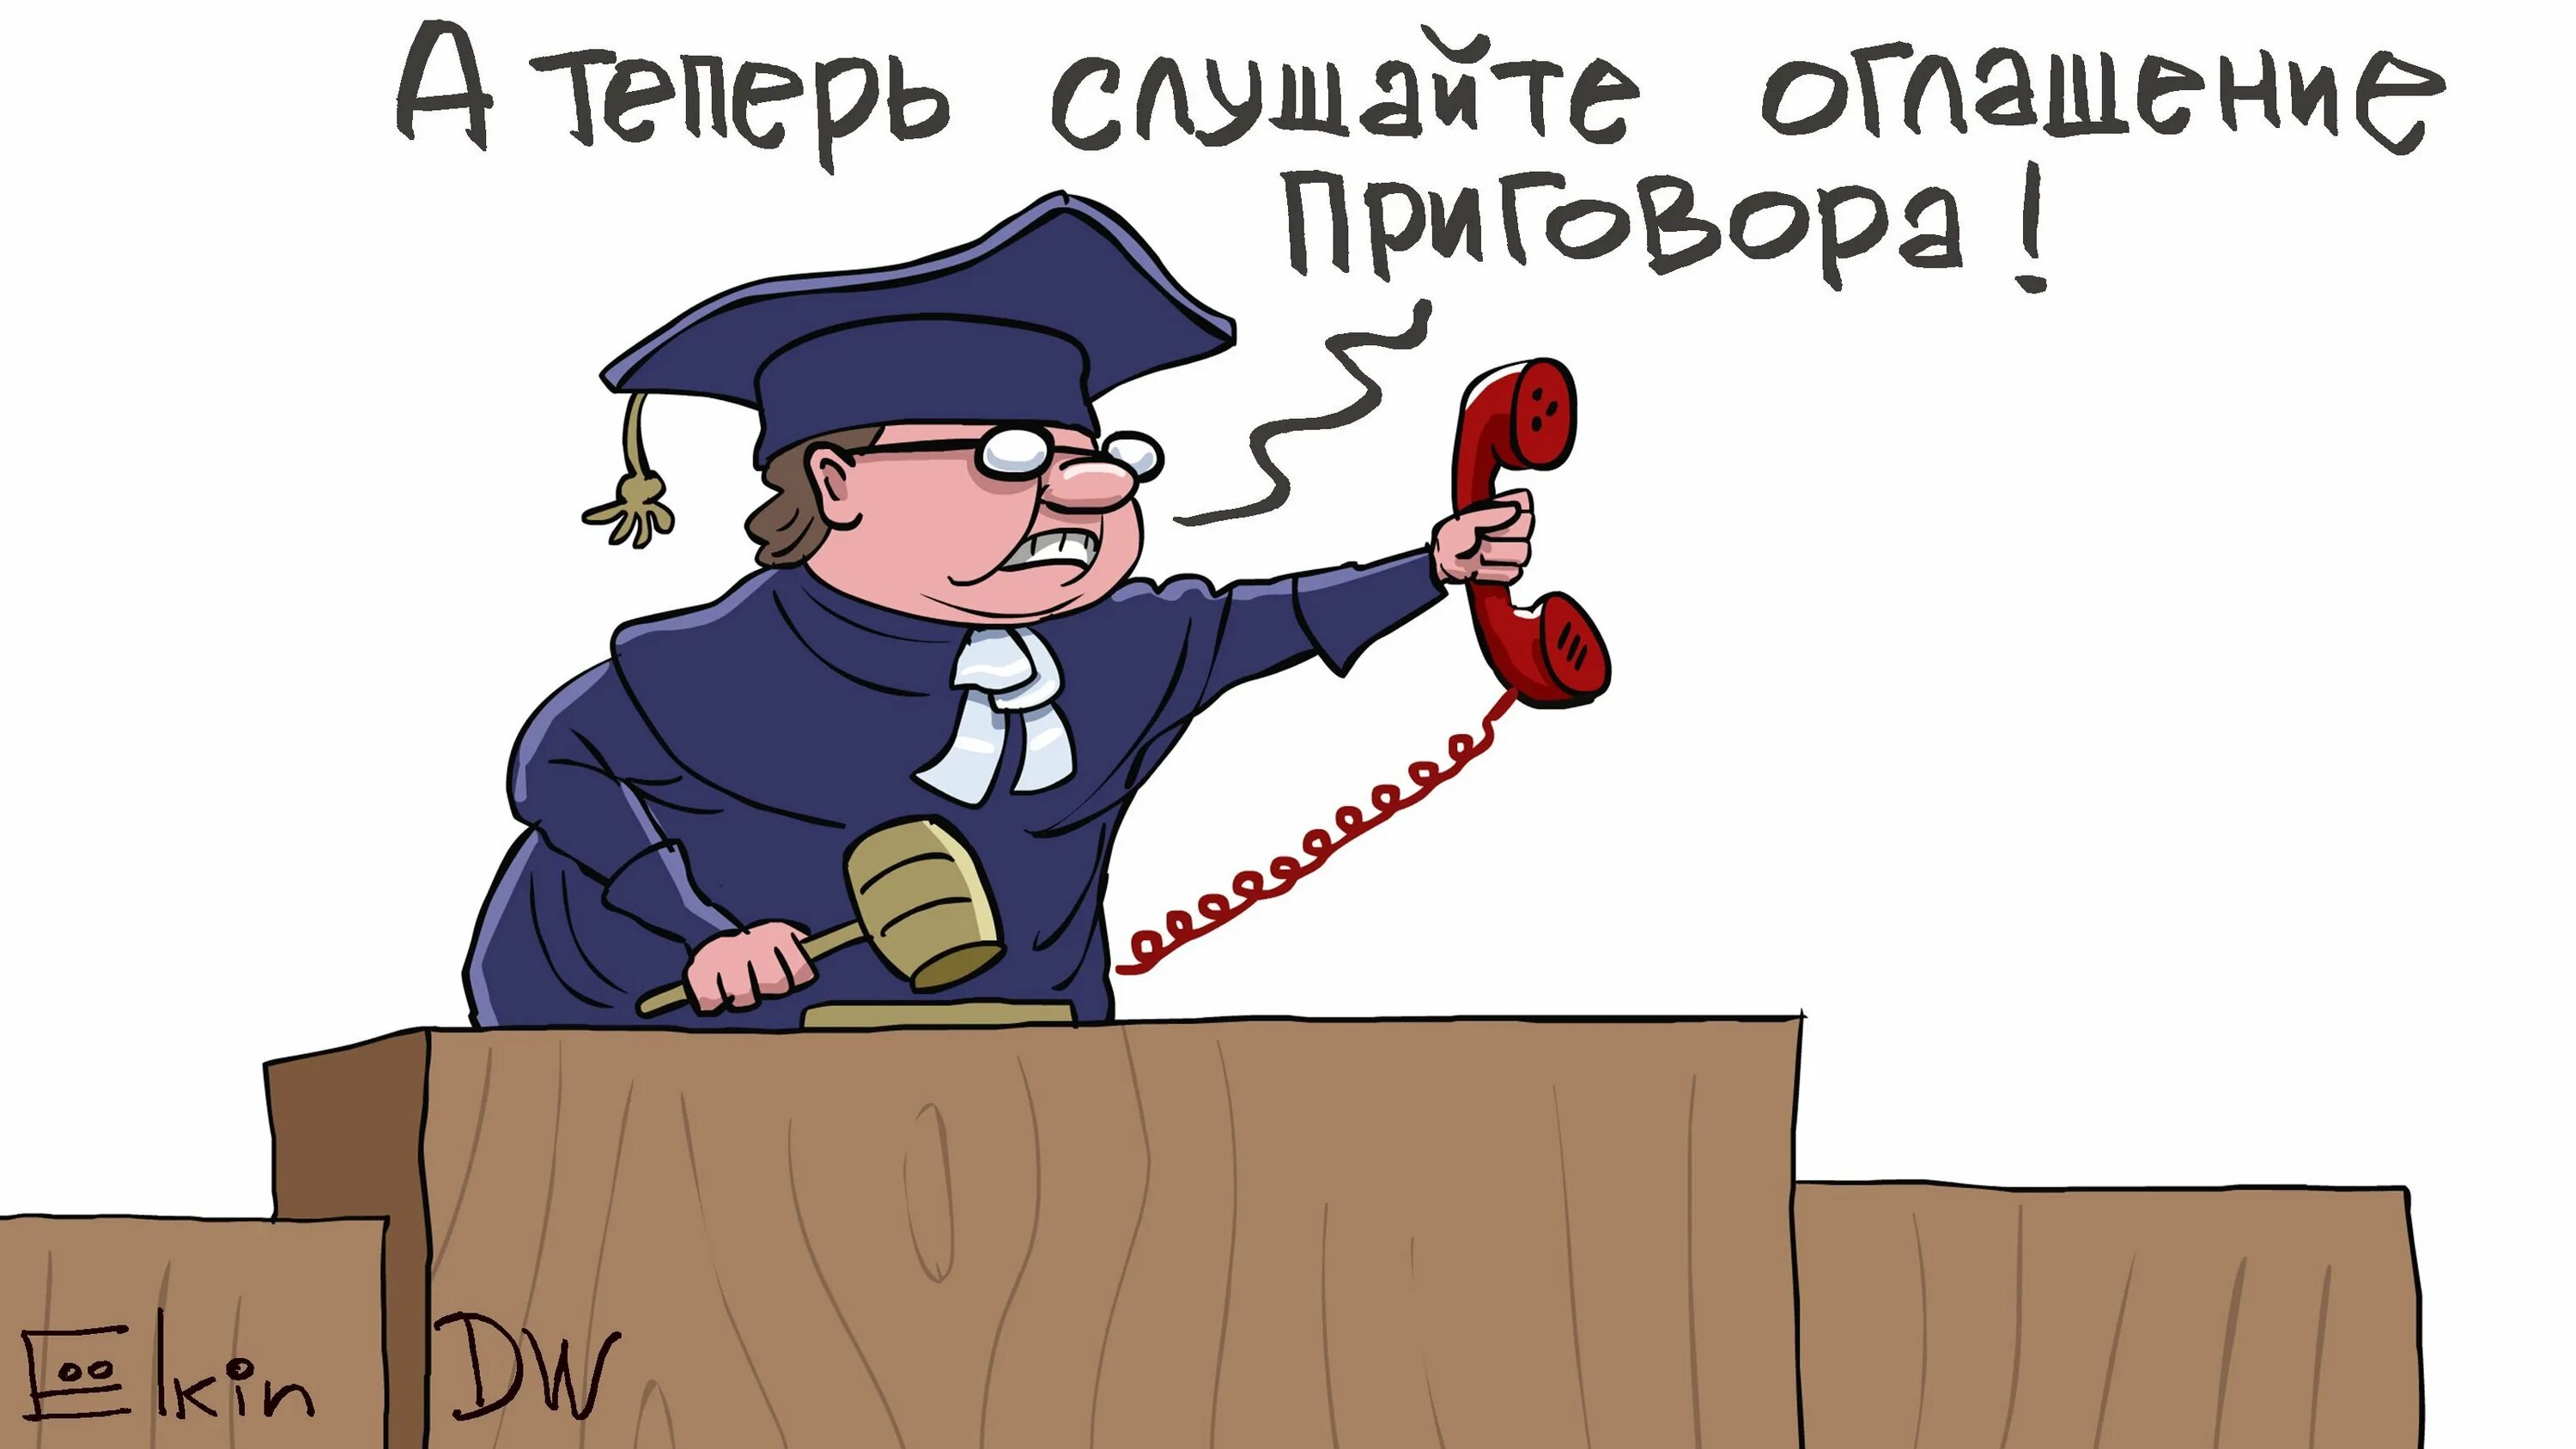 Что решено исполню. Суд карикатура. Судья карикатура. Российский суд карикатуры. Карикатура на судебную систему.